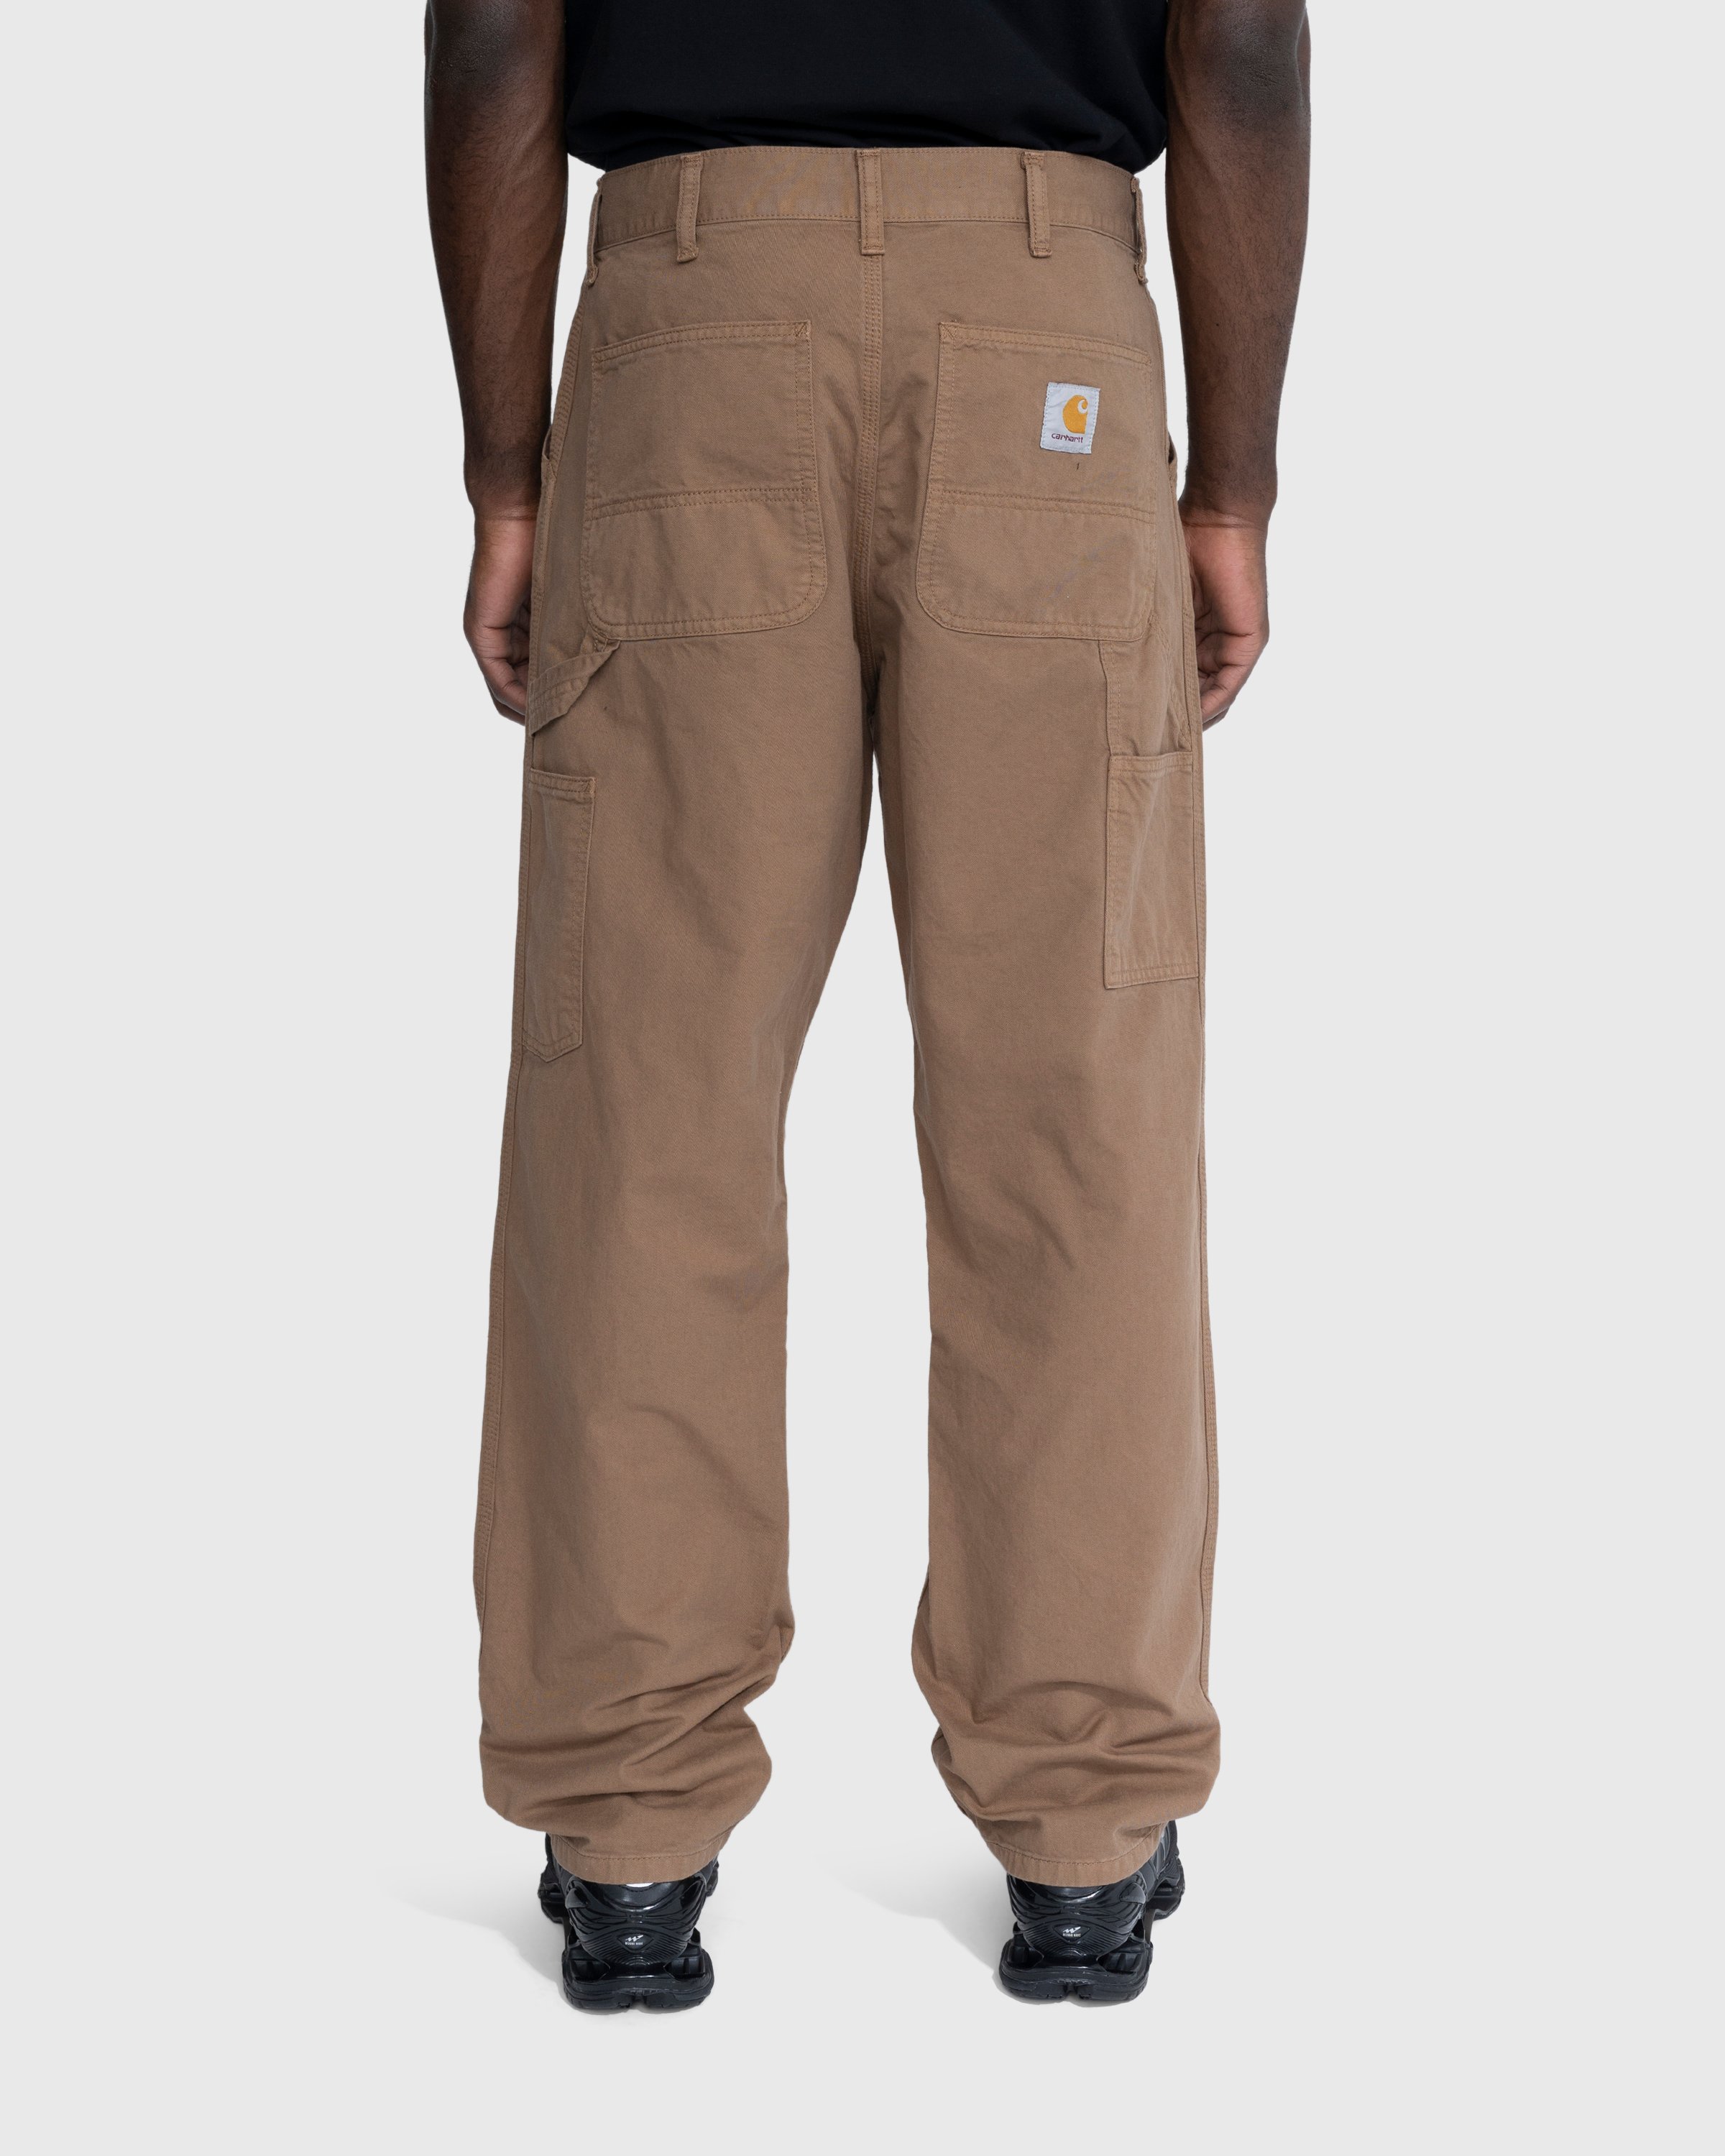 Carhartt WIP - Single Knee Pant Buffalo - Clothing - Brown - Image 3